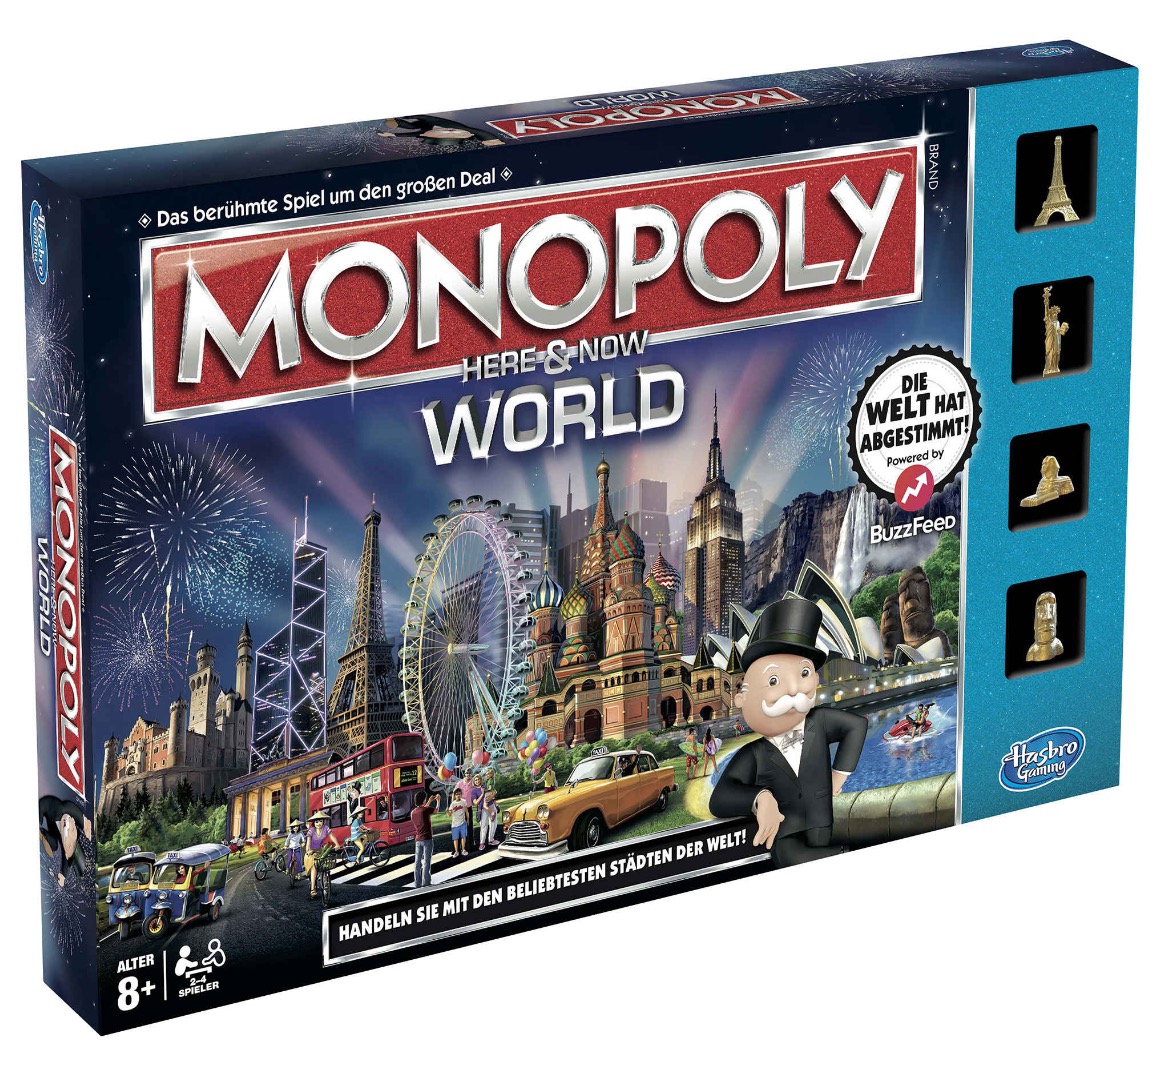 Hasbro Monopoly Here & Now World Edition für nur 11,99 Euro